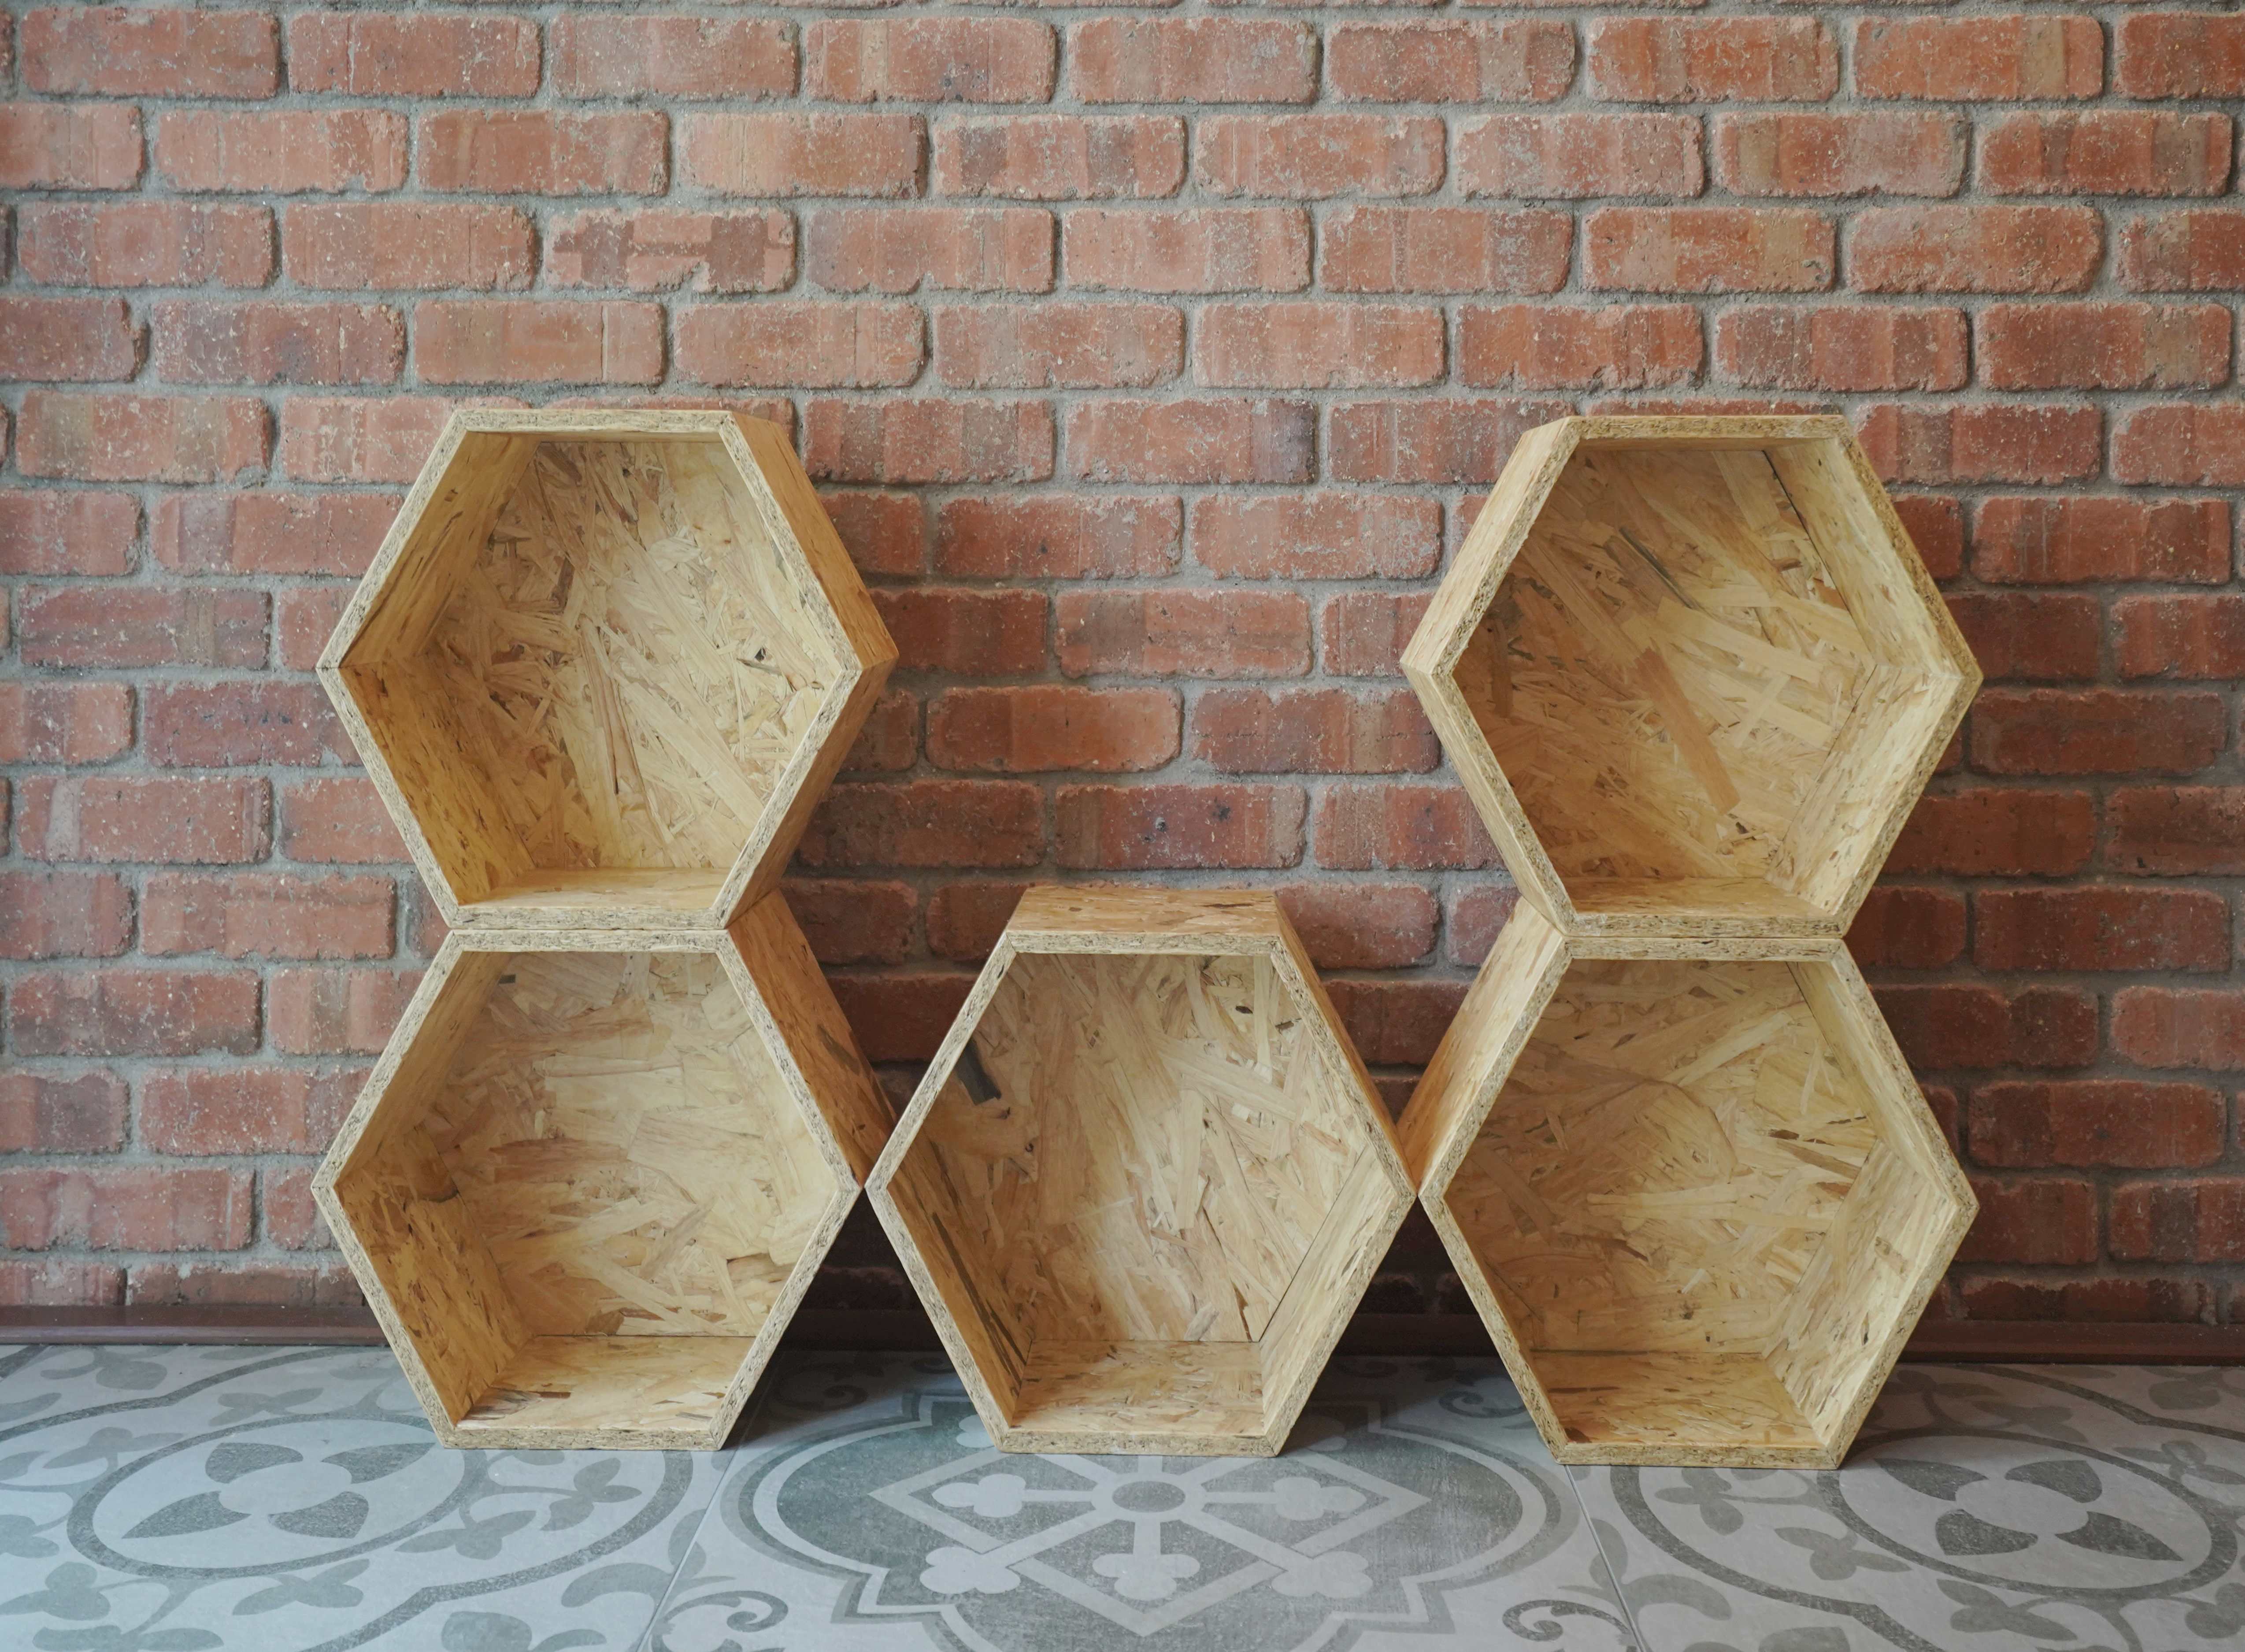 Wooden Hexagon Shelves/Trays for DIY Decor, Set of 7